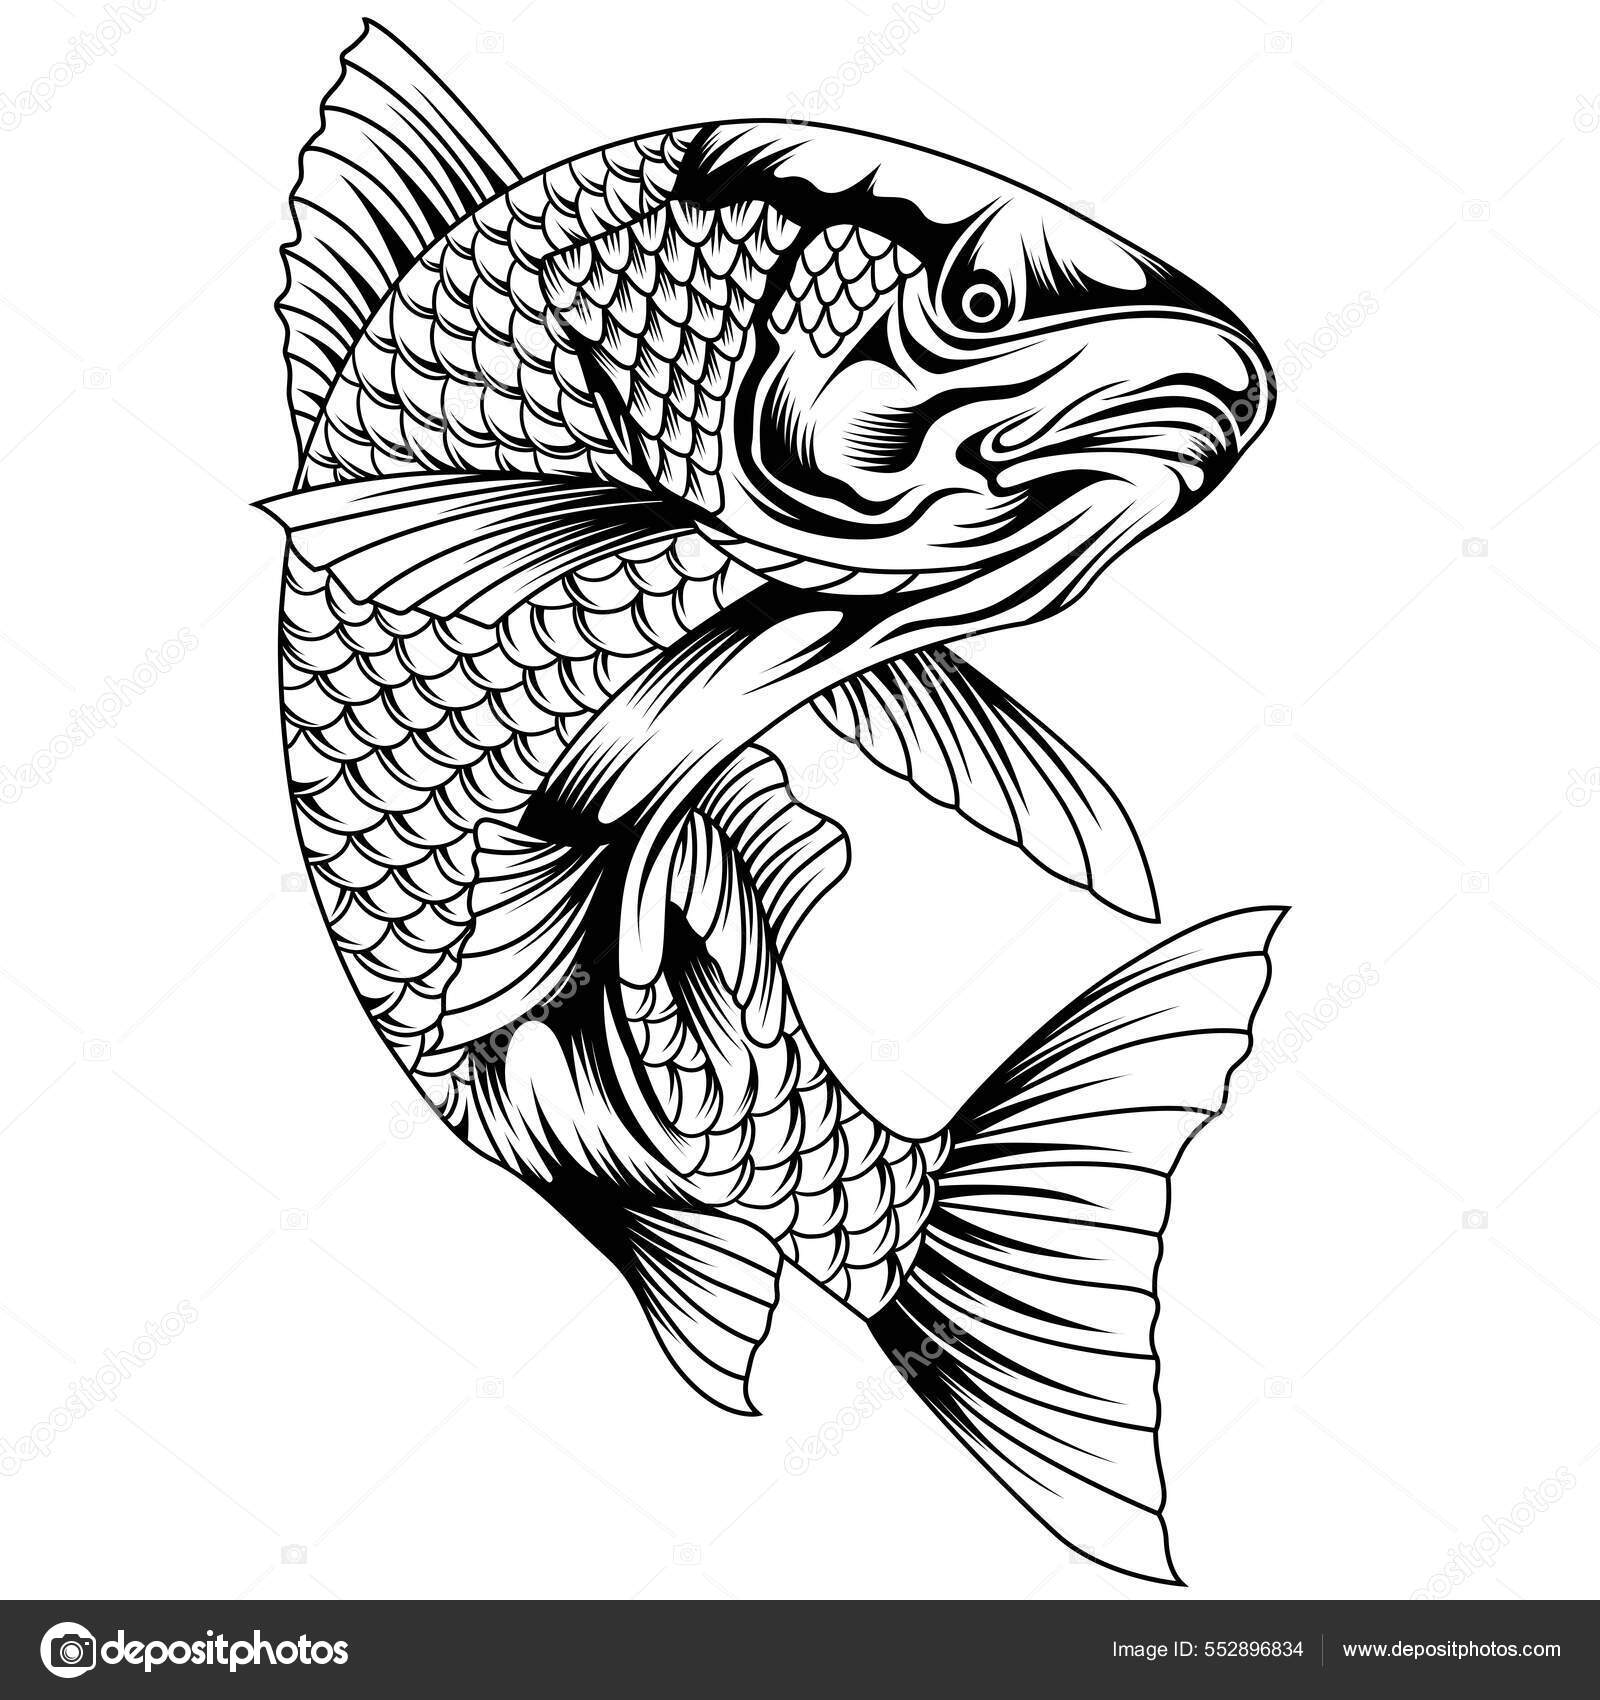 https://st.depositphotos.com/44324060/55289/v/1600/depositphotos_552896834-stock-illustration-redfish-fishing-logo-template-fresh.jpg